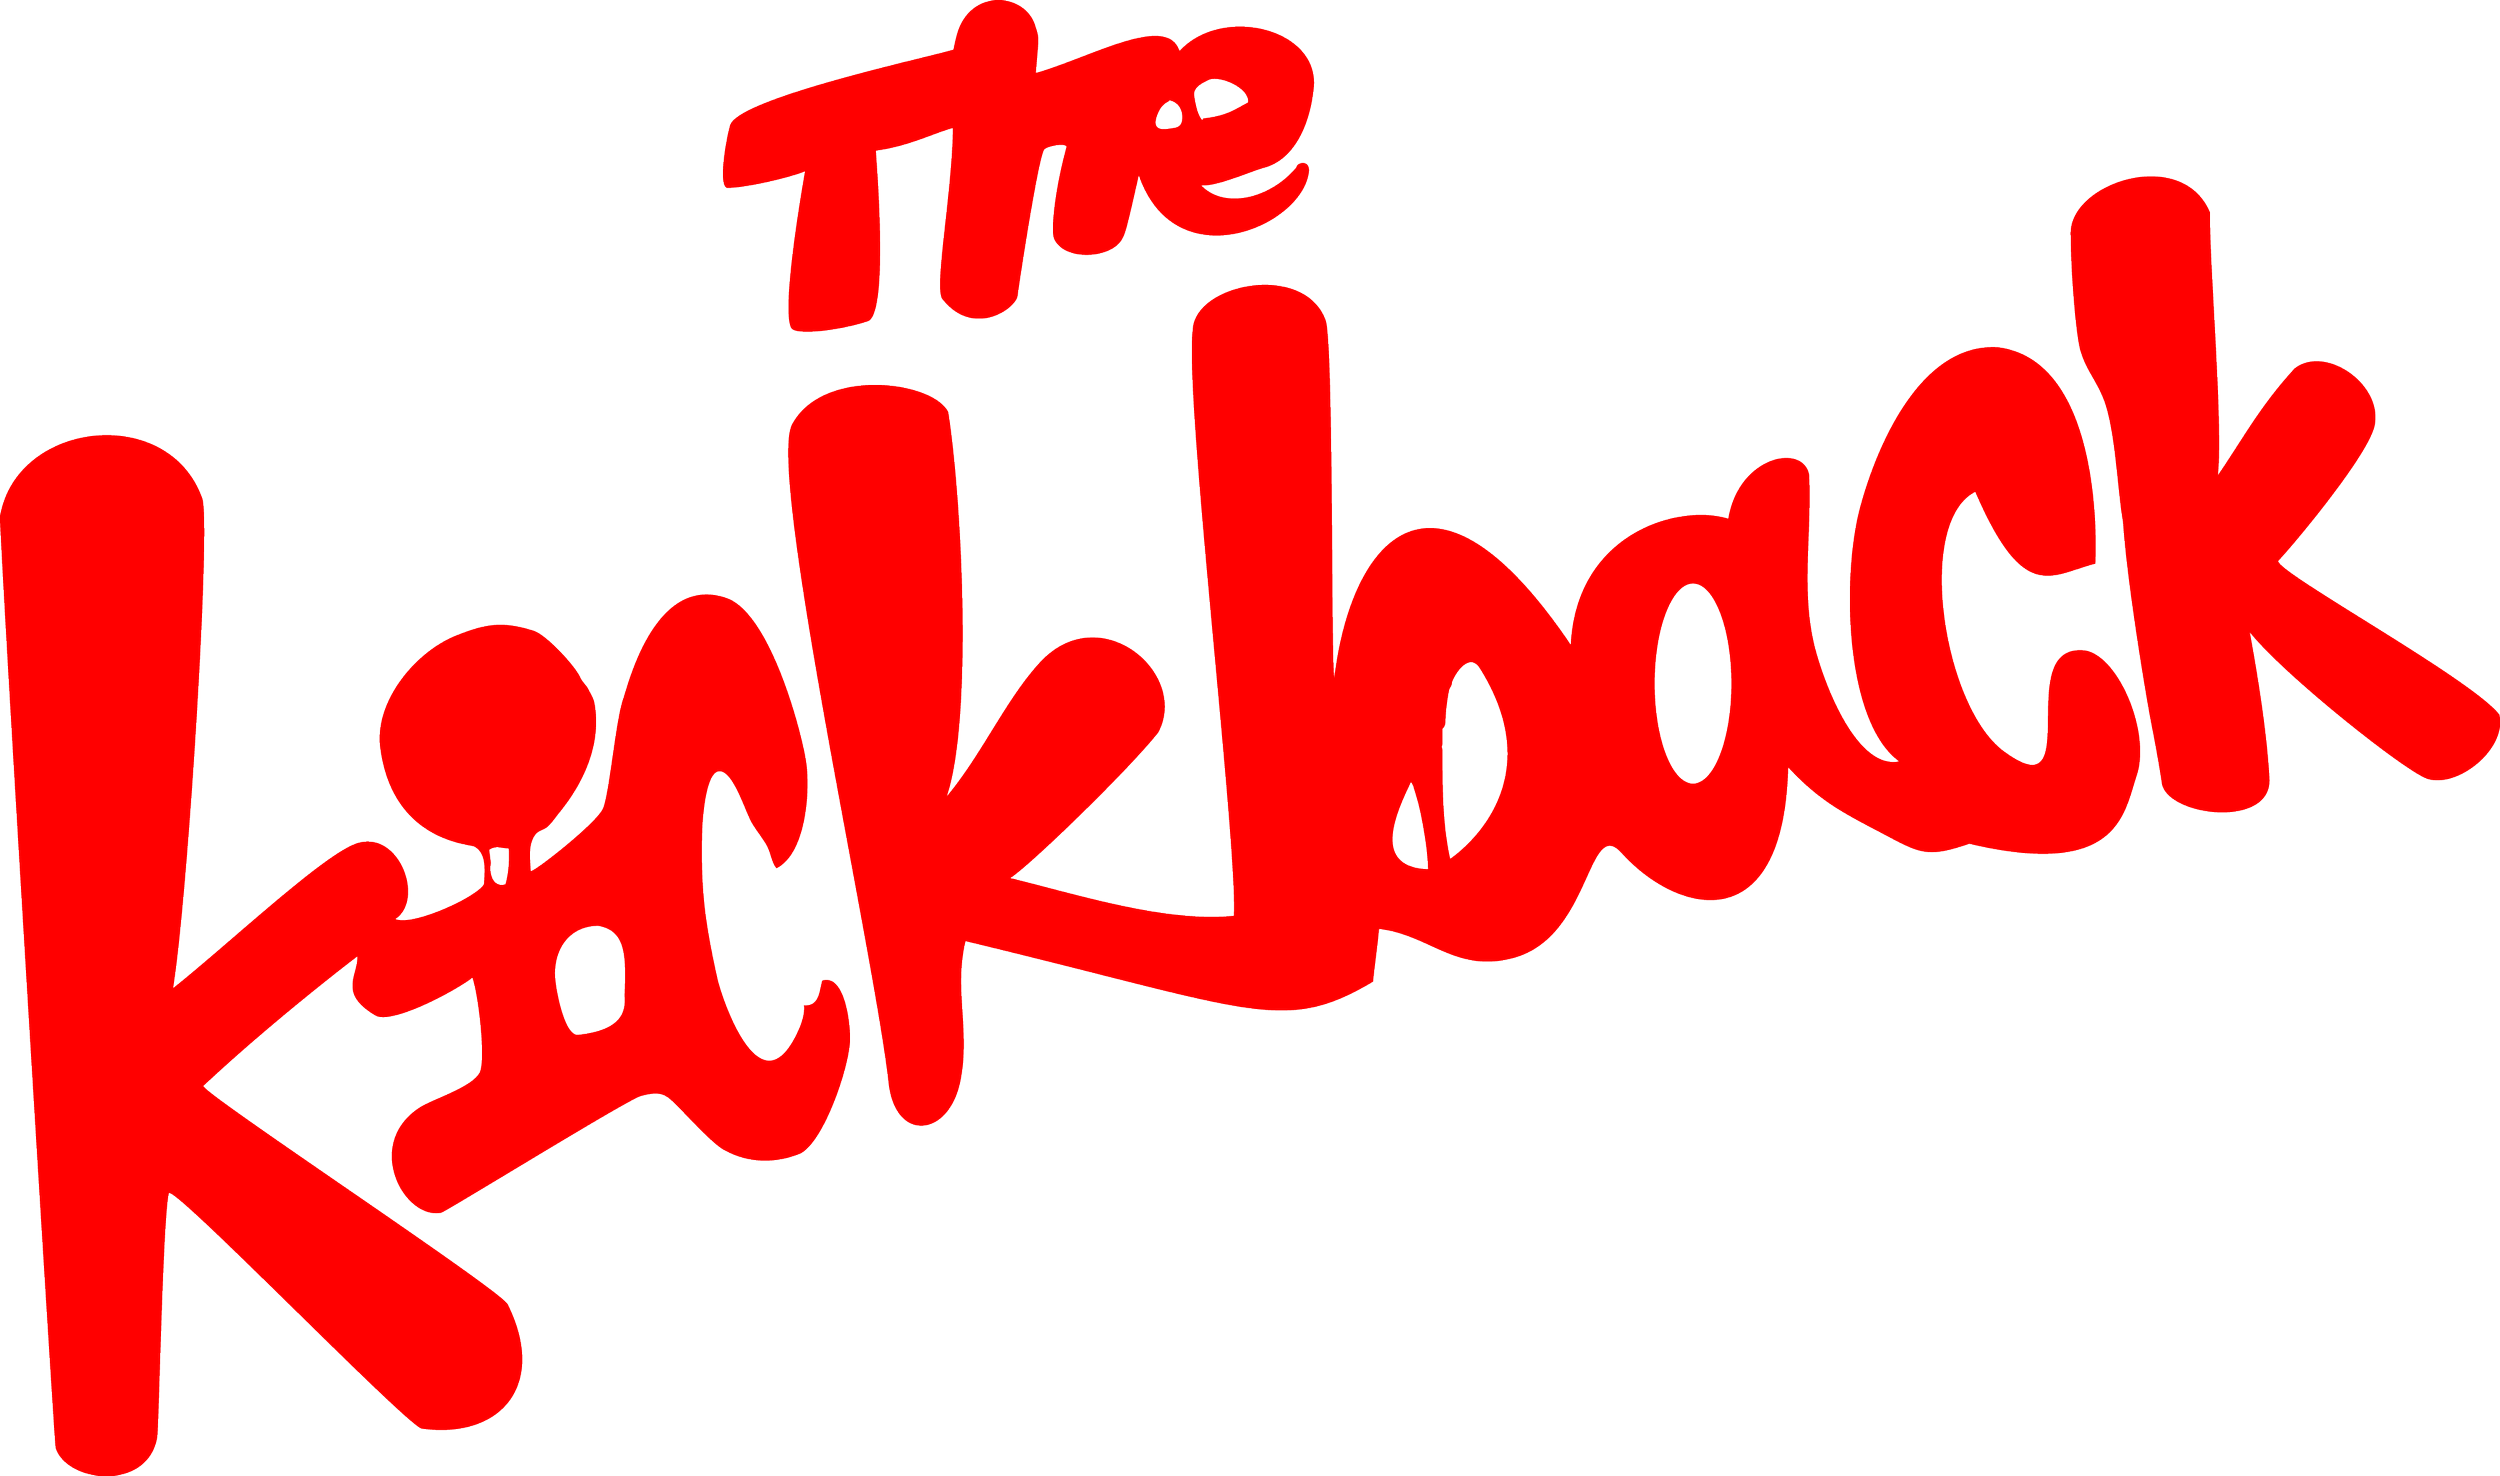 The KIckback Logo Design (1).png